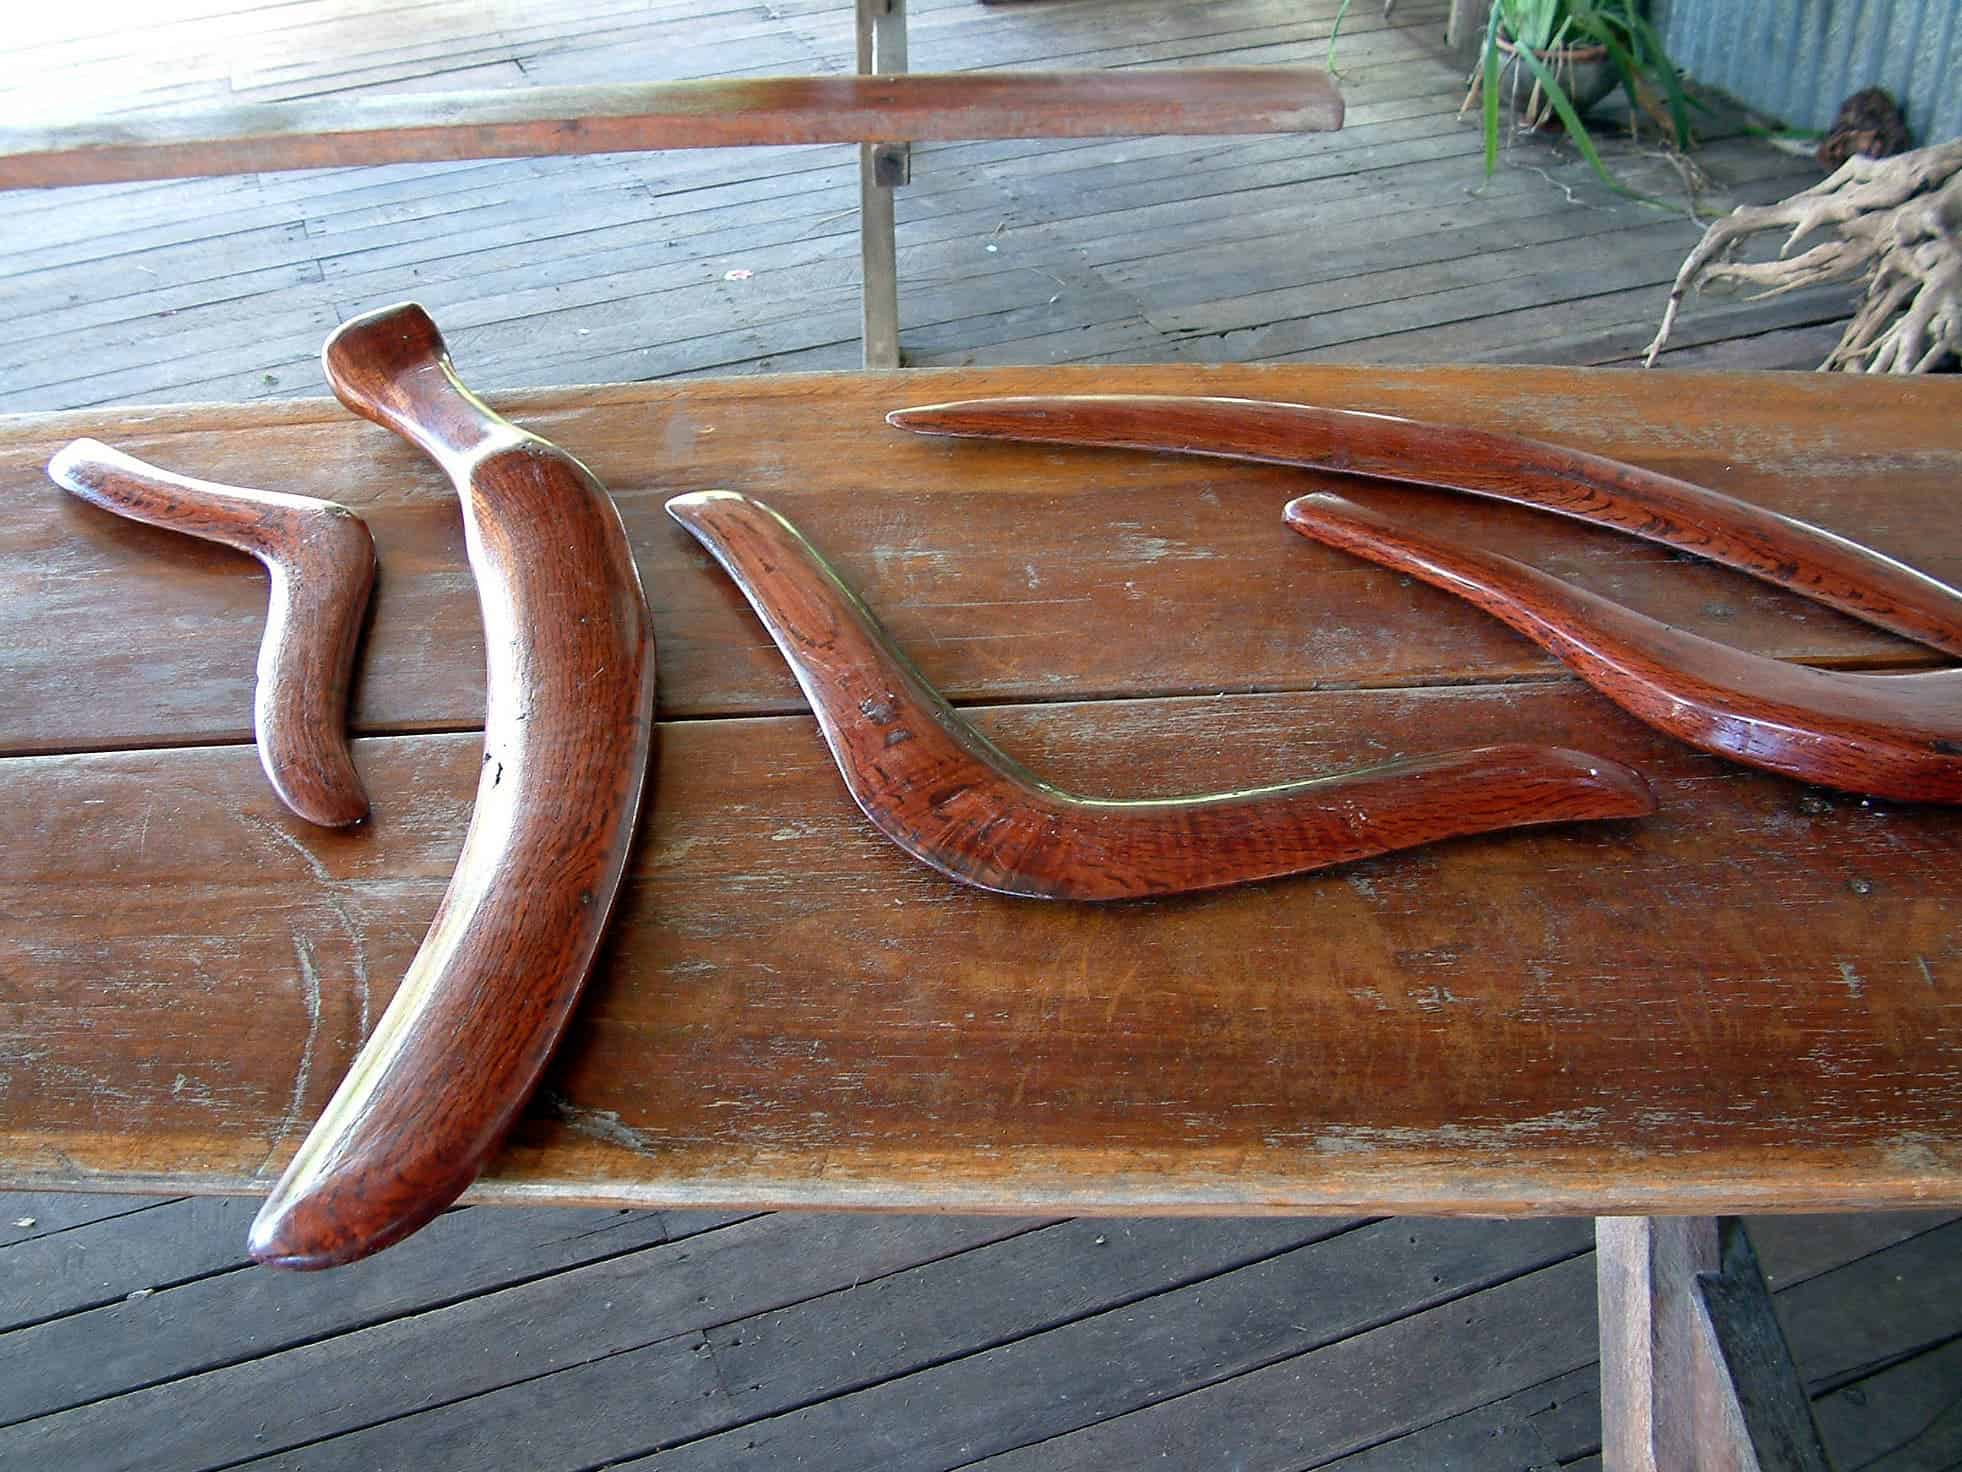 Australian Aboriginal boomerangs. Credit: Wikipedia